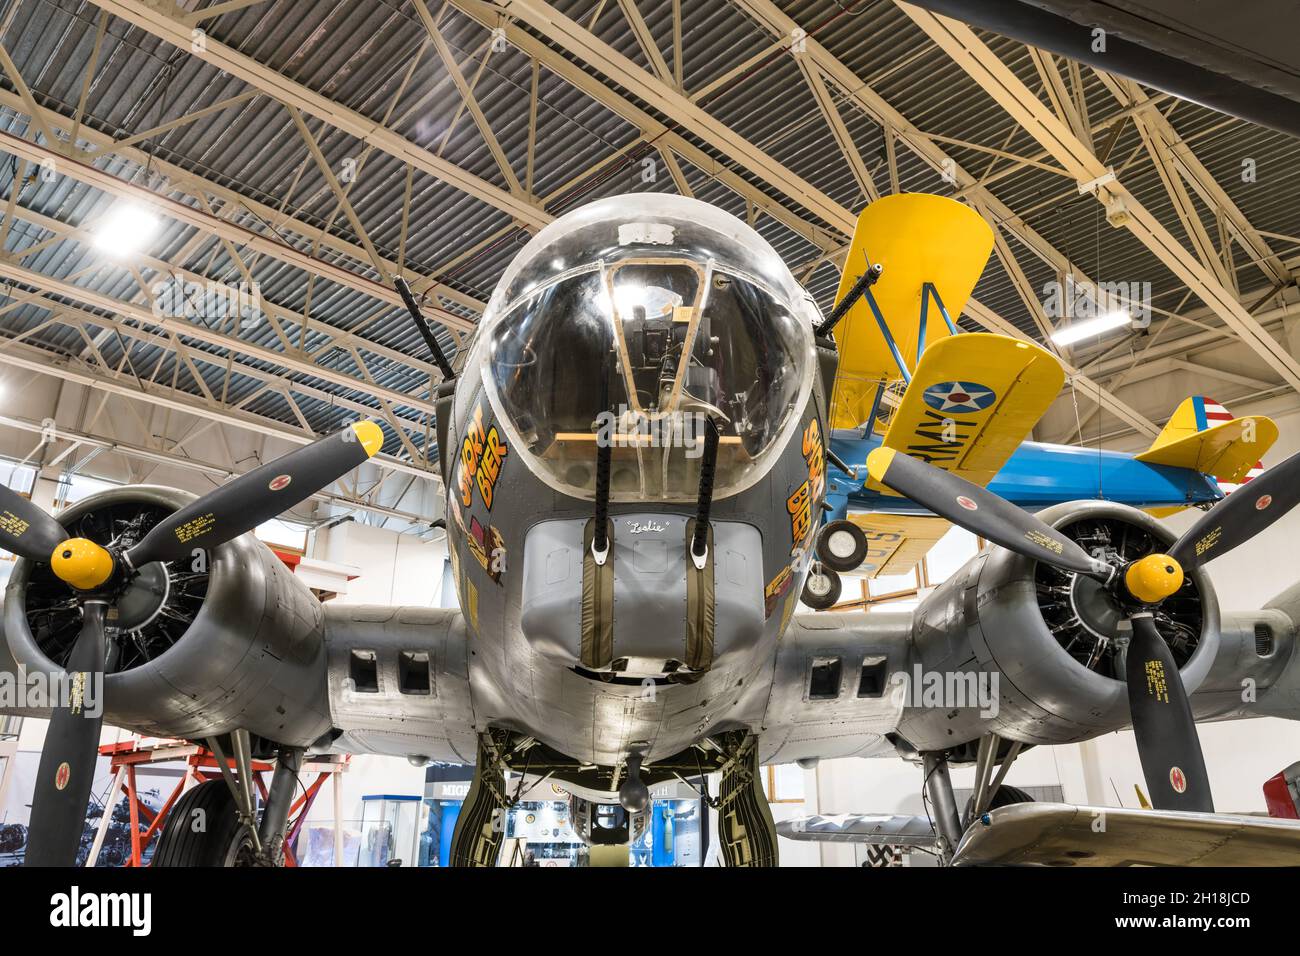 Un bombardero pesado Boeing B-17G Flying Fortress WWII en el Hill Aerospace Museum en Utah. Foto de stock